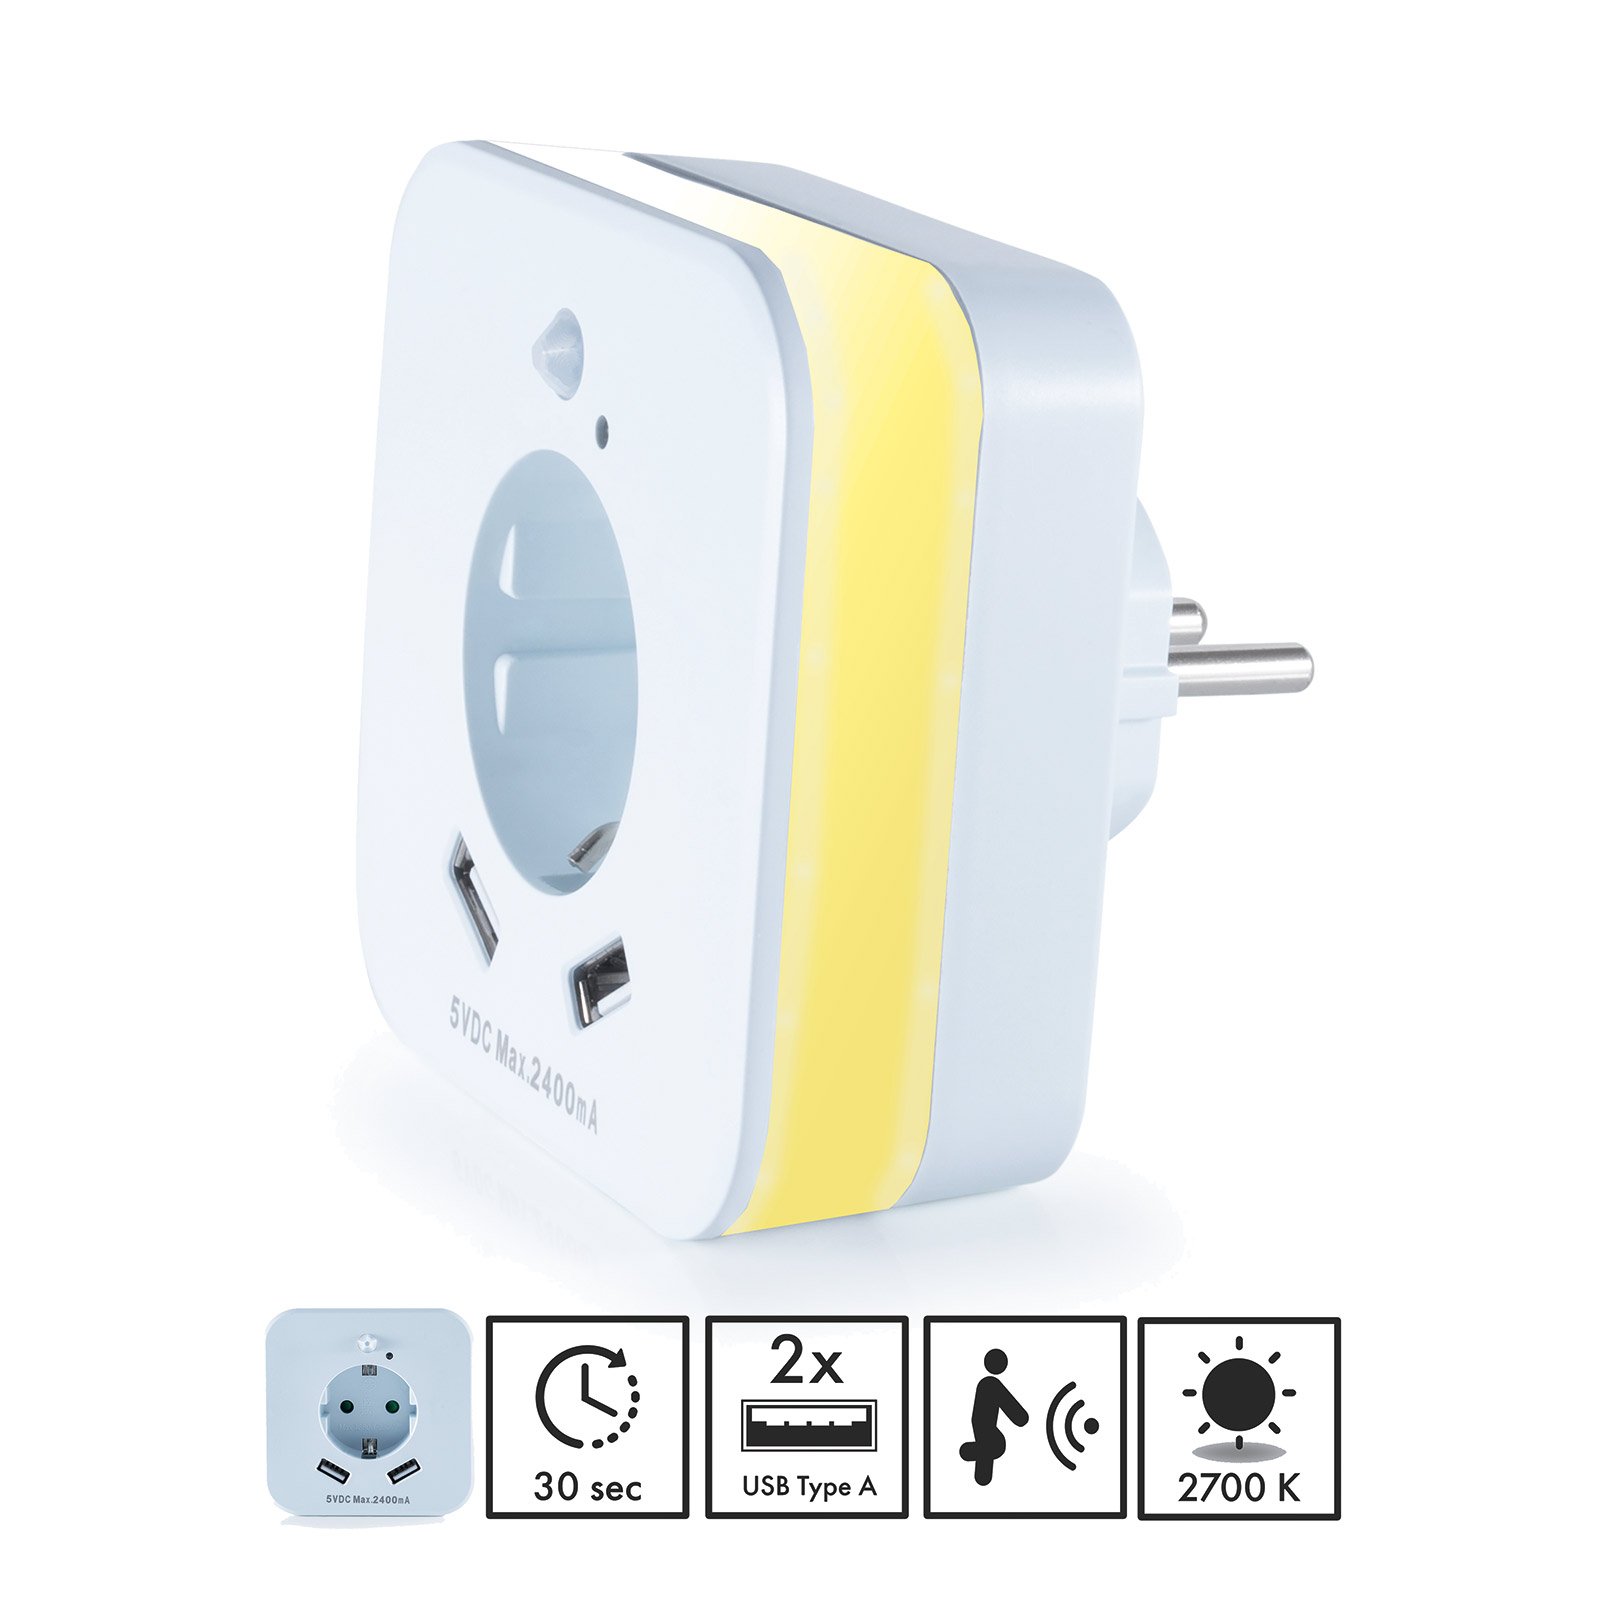 Legitim Gør det ikke uddybe SLED02 LED-natlampe med sensor og USB-stik | Lampegiganten.dk